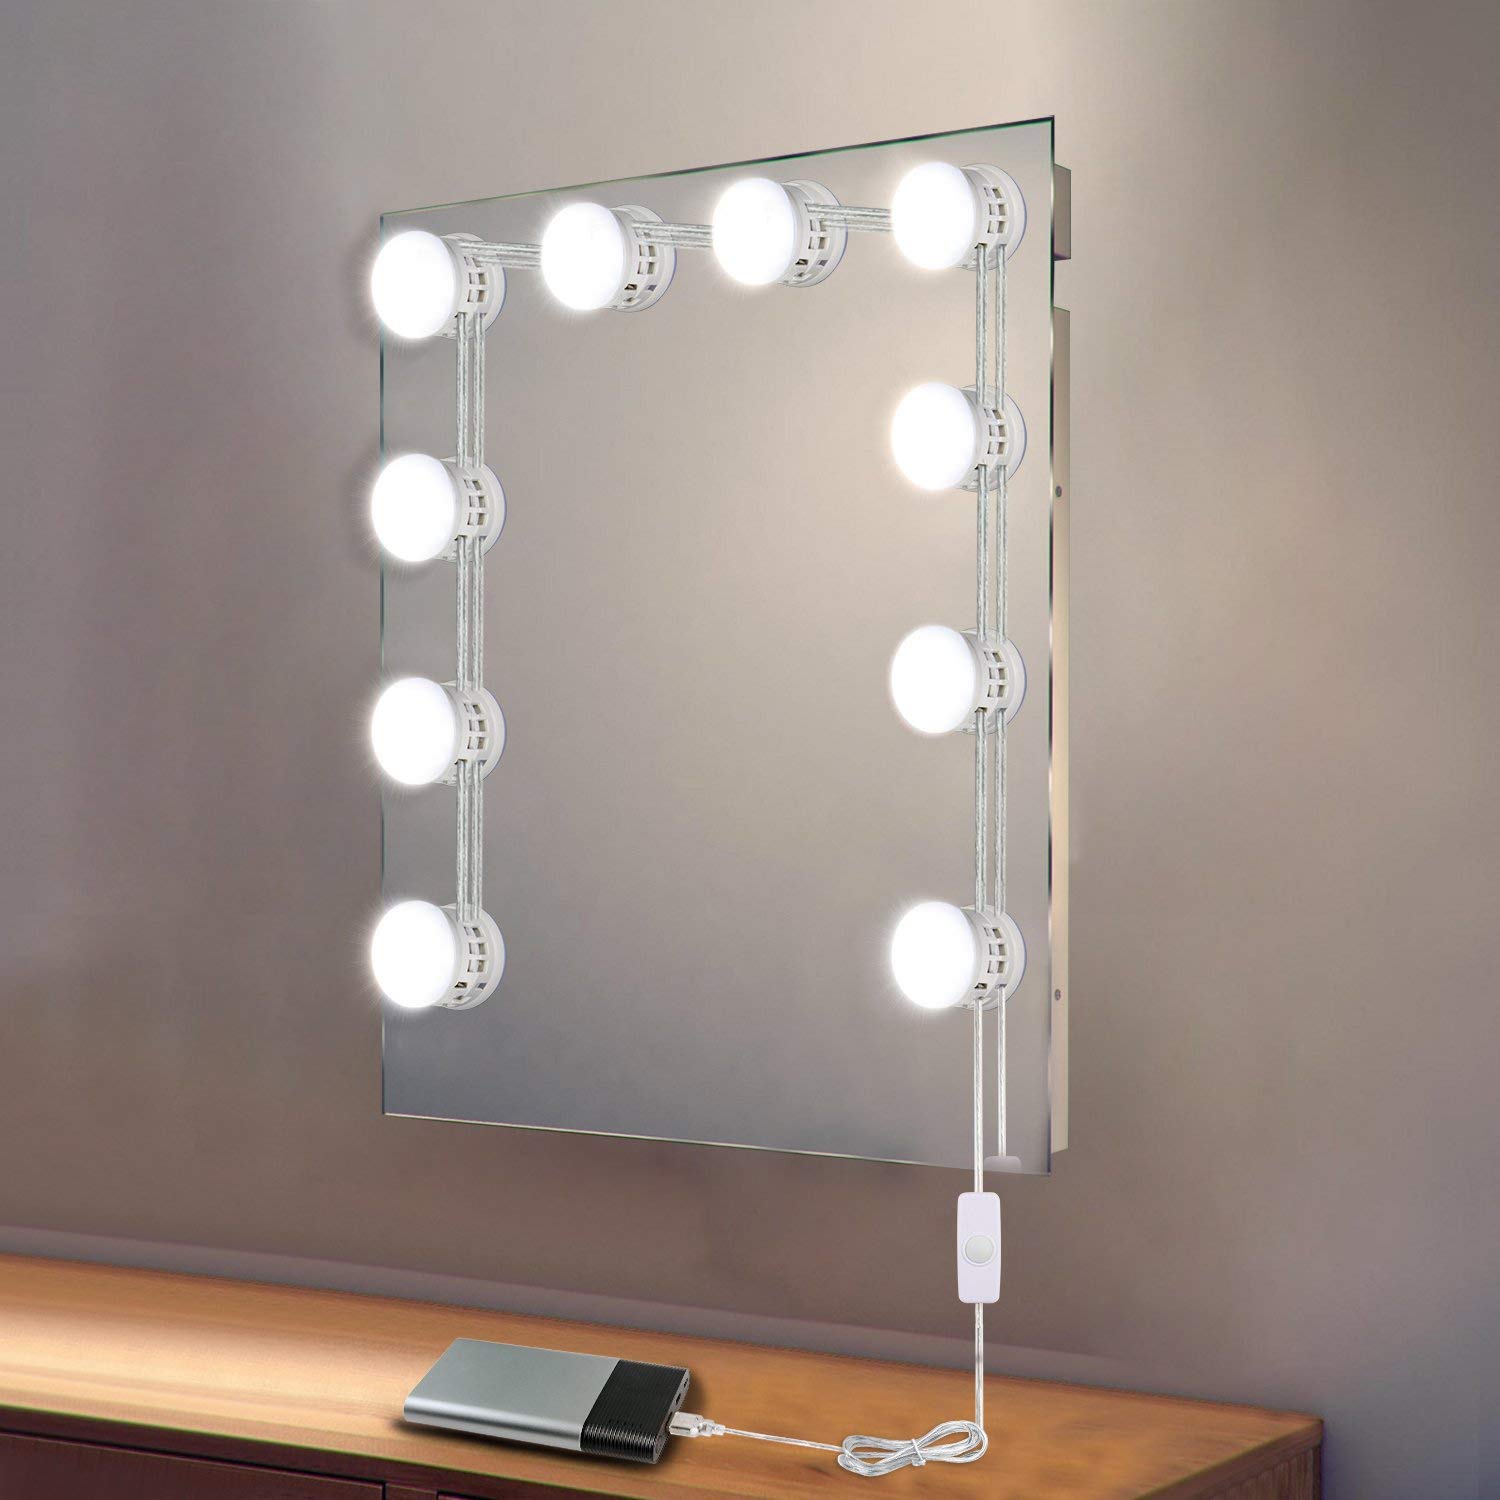 KMASHI Vanity Mirror Lights, LED Makeup Vanity Light Kit with 10 Cosme